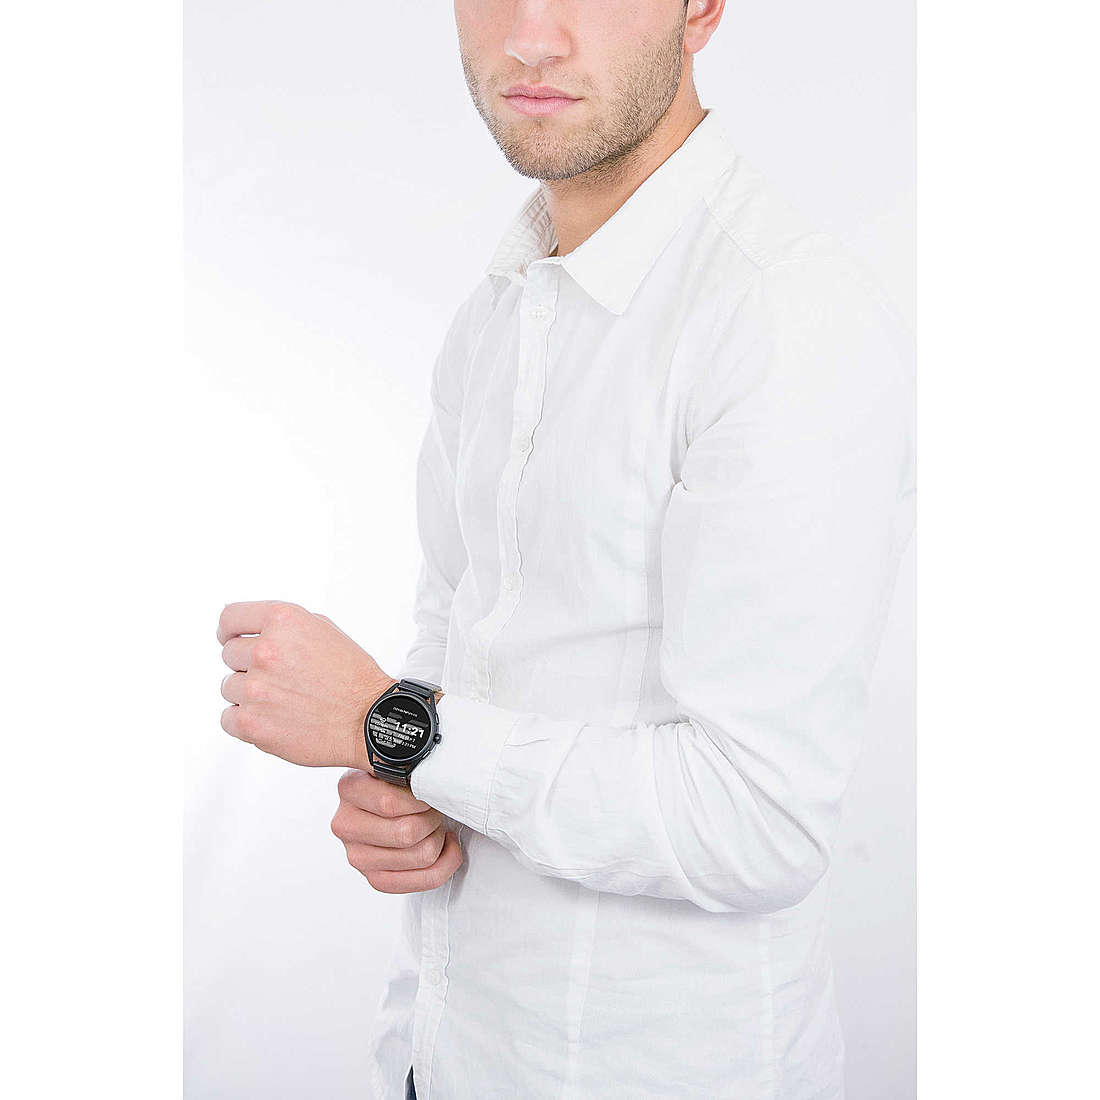 Emporio Armani Smartwatches uomo ART5020 indosso